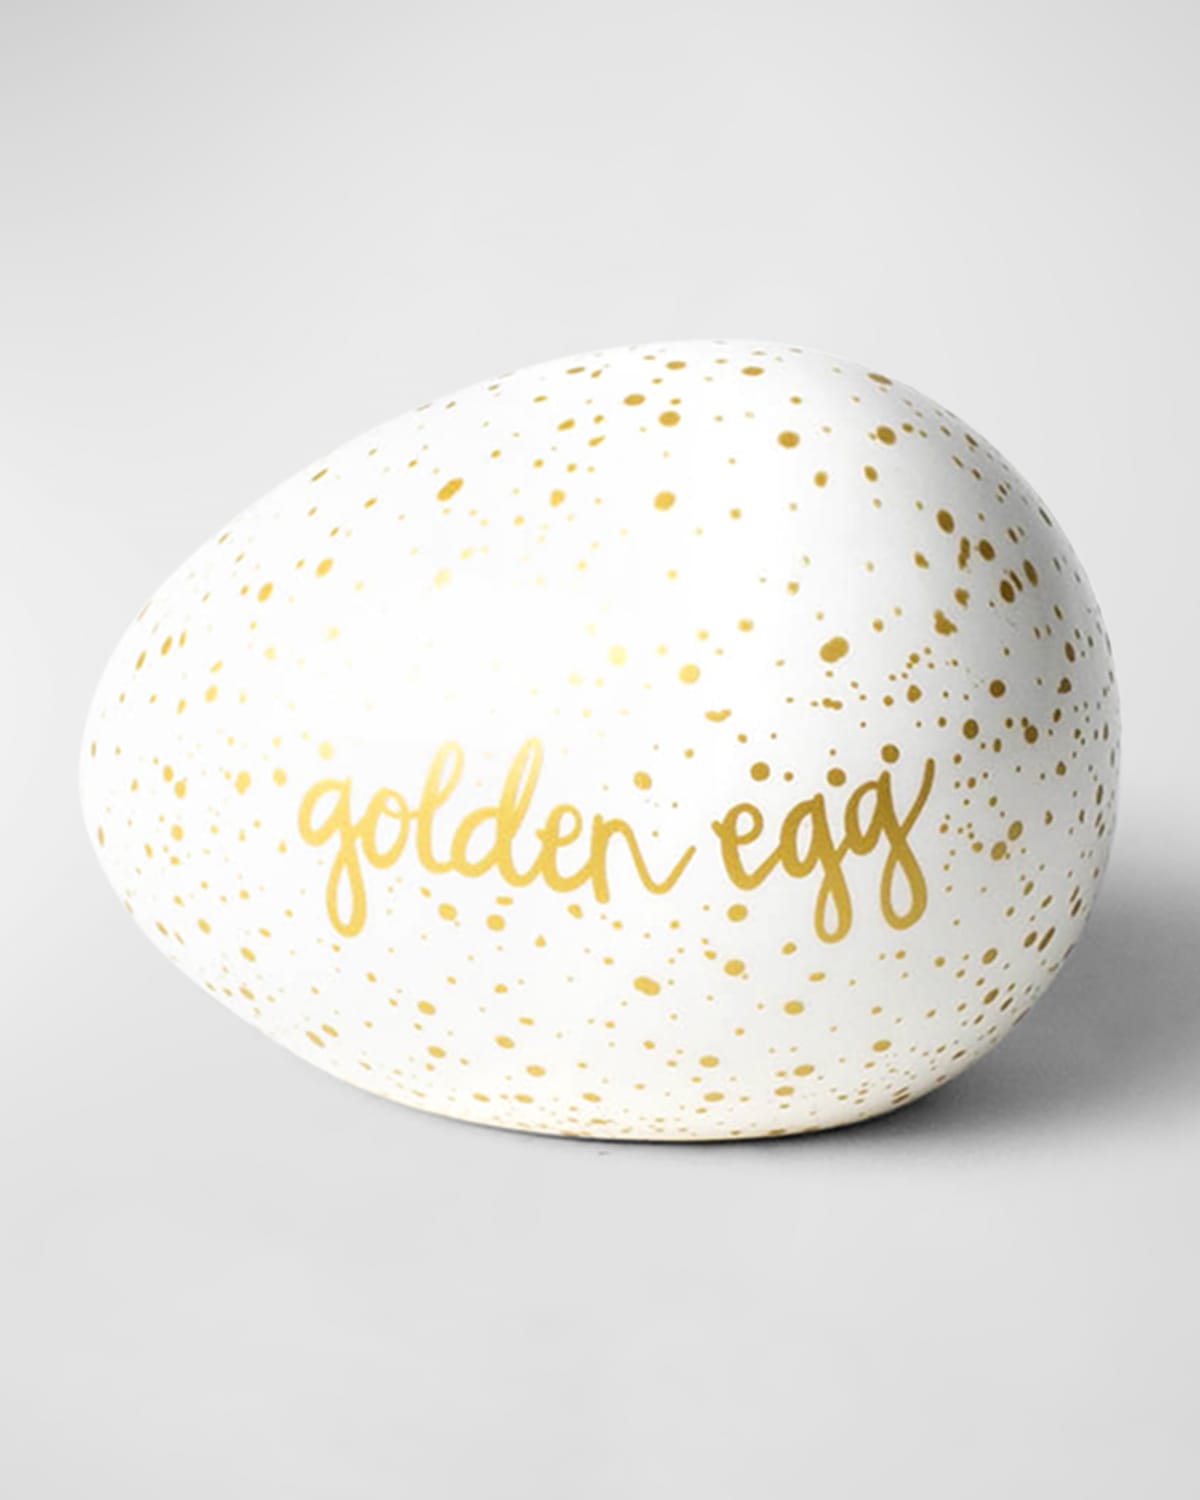 Coton Colors Speckled Easter Egg